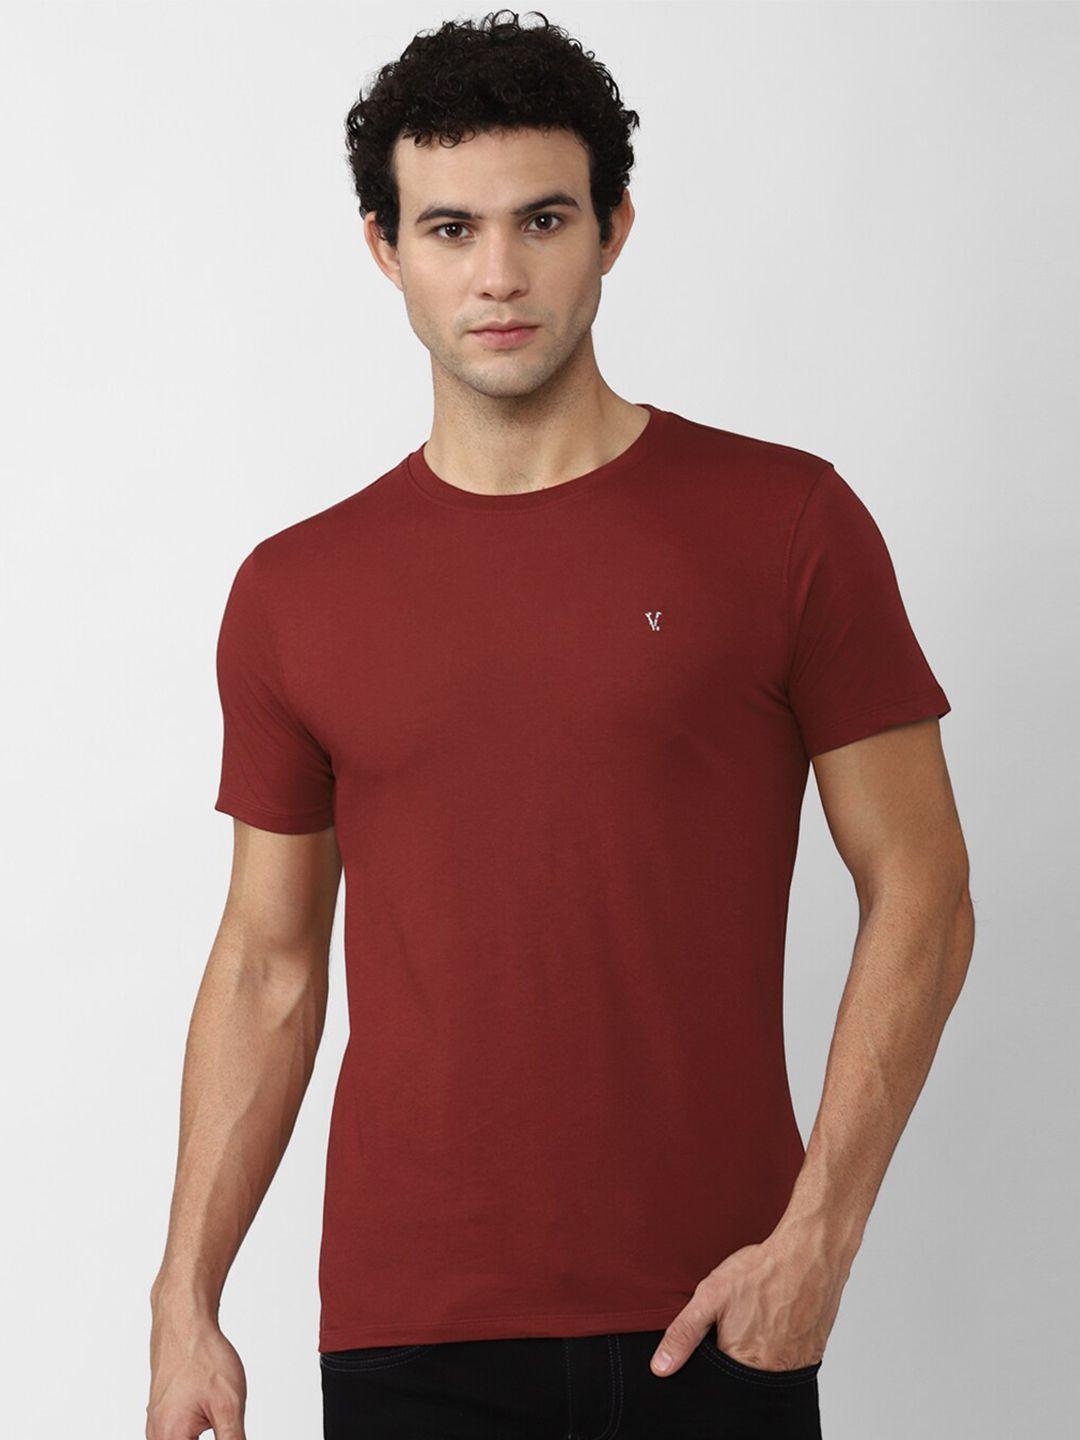 v dot men maroon slim fit cotton t-shirt